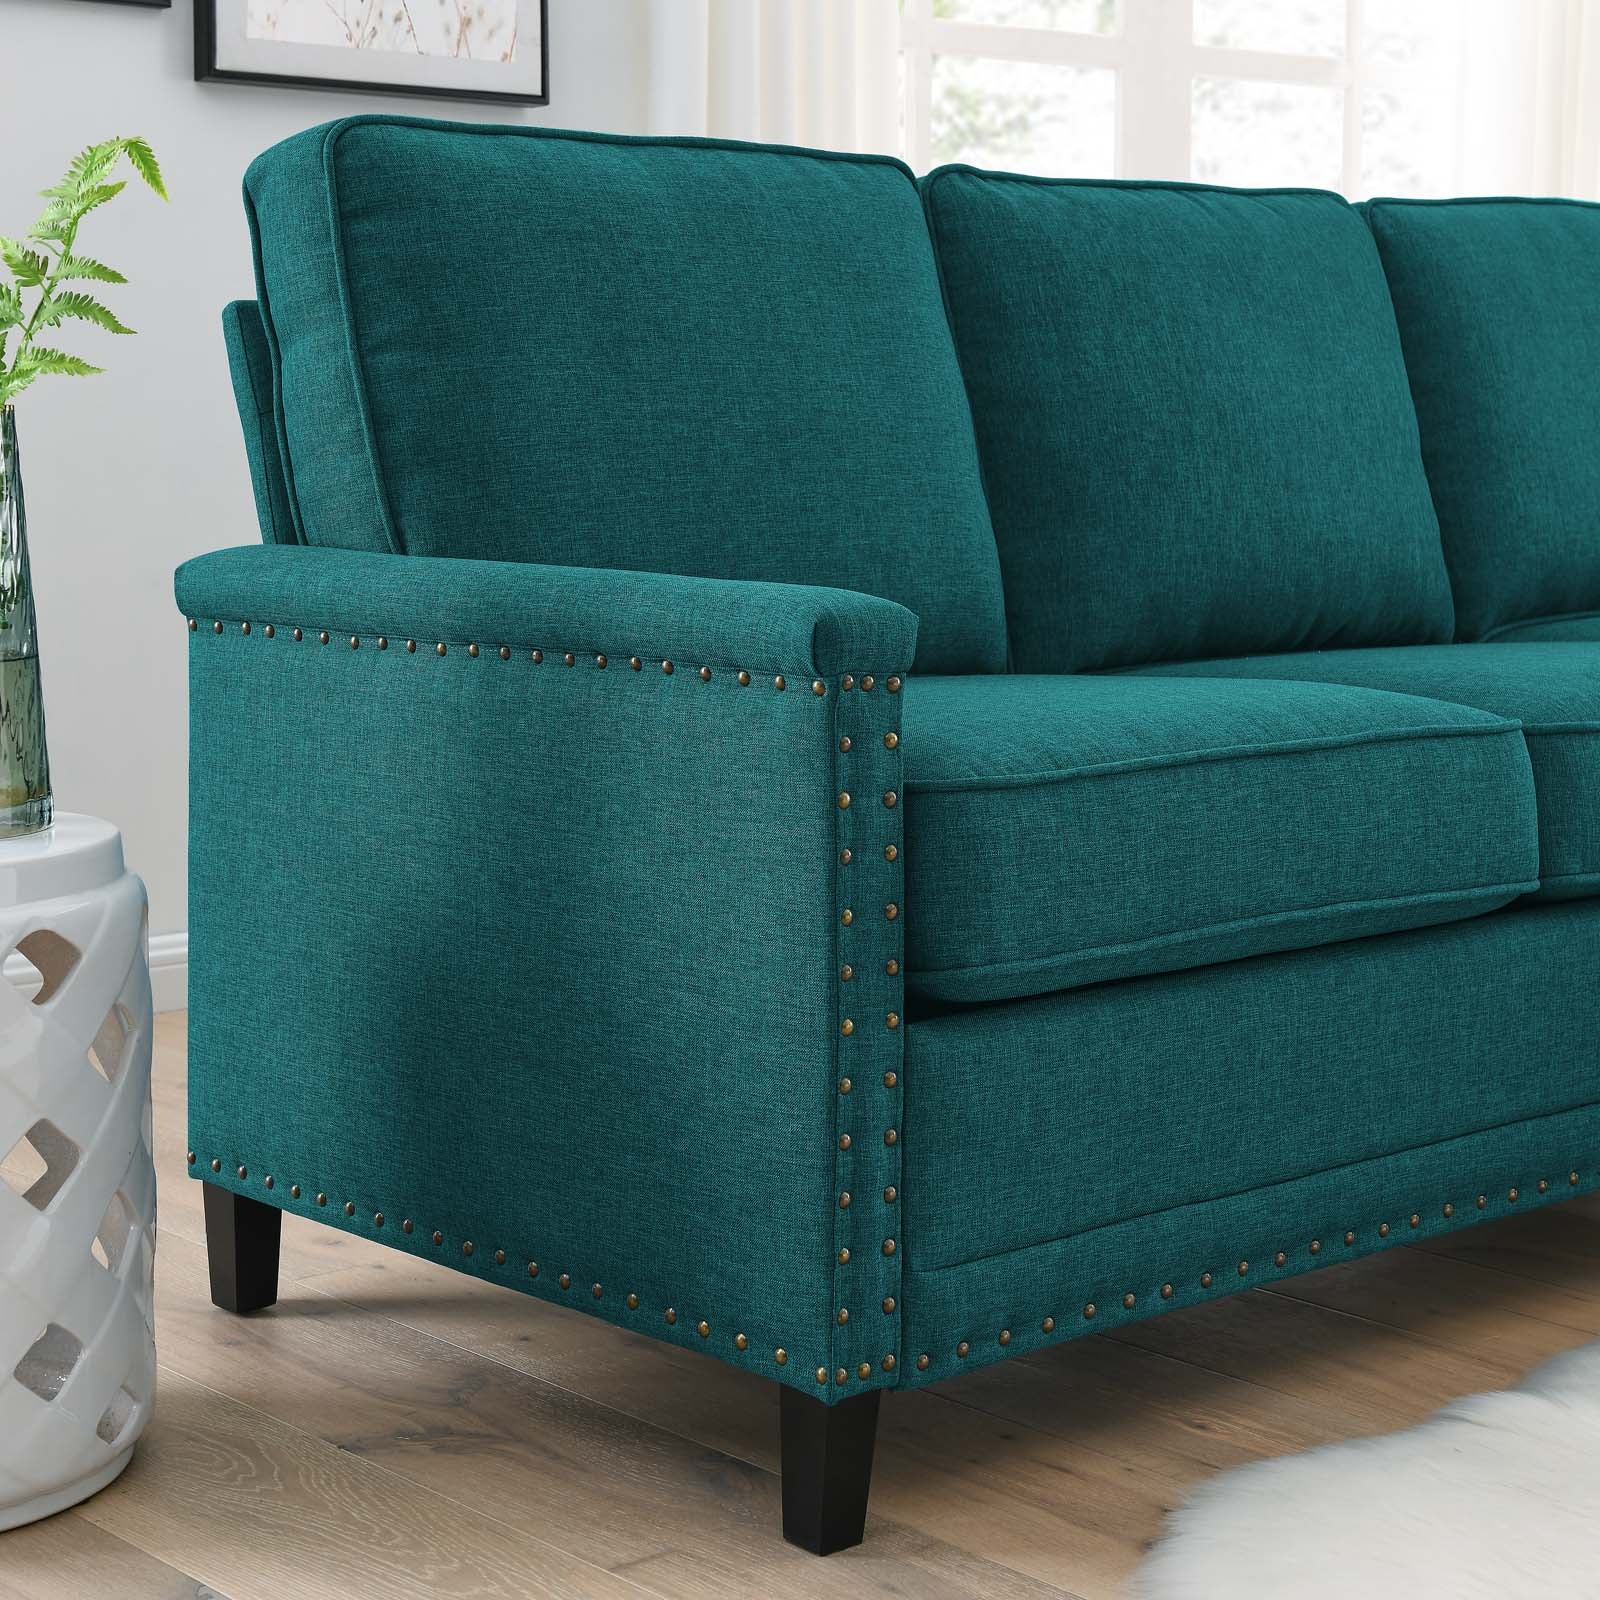 Ashton Upholstered Fabric Sectional Sofa